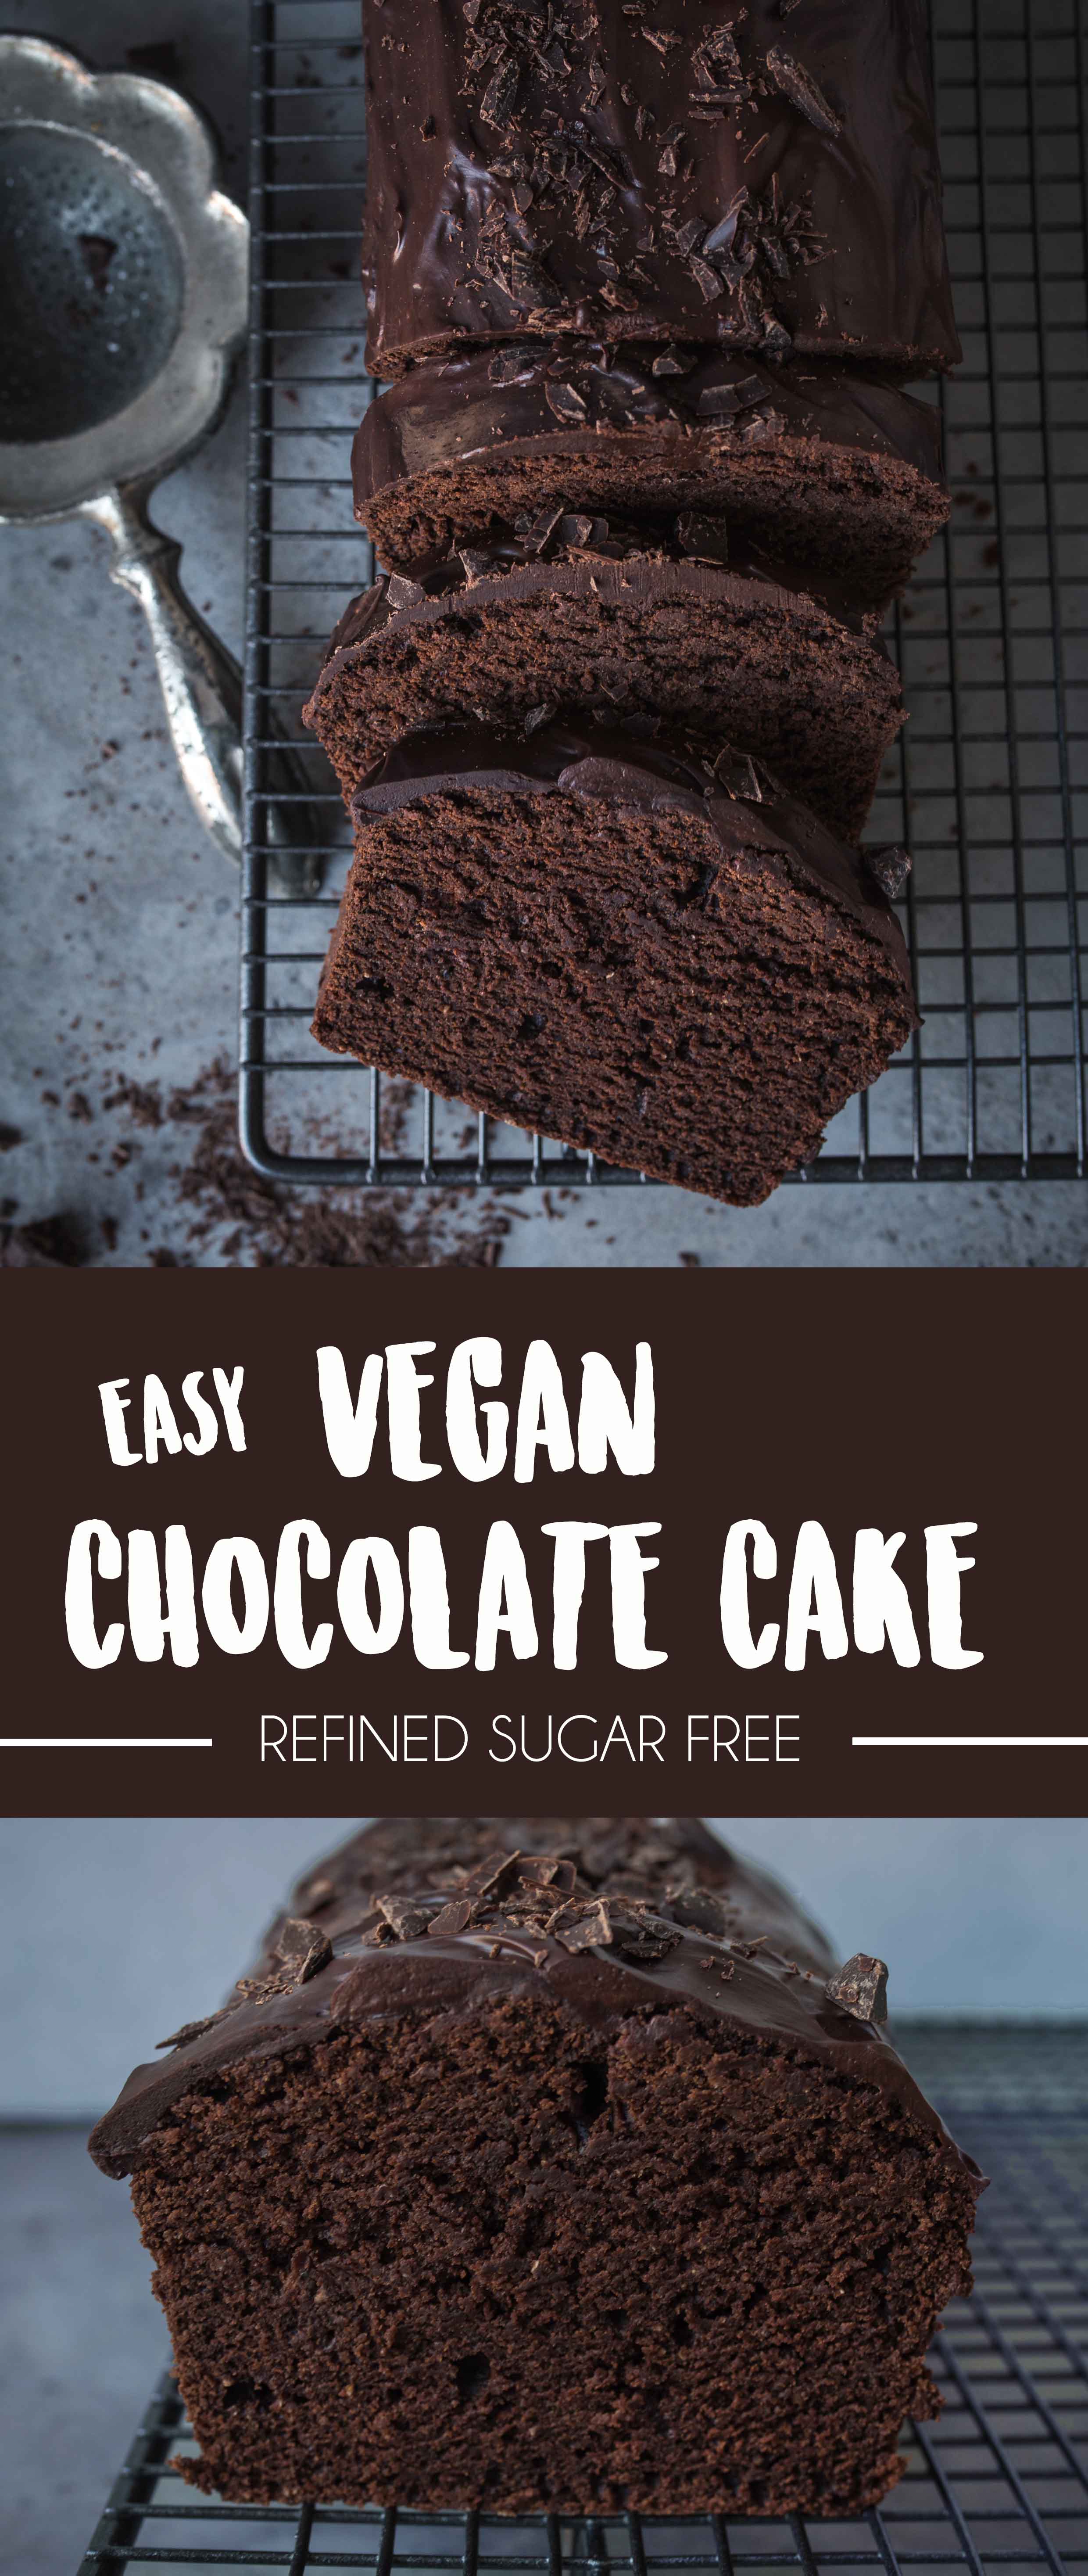 Basic Vegan Chocolate cake - everyone can make